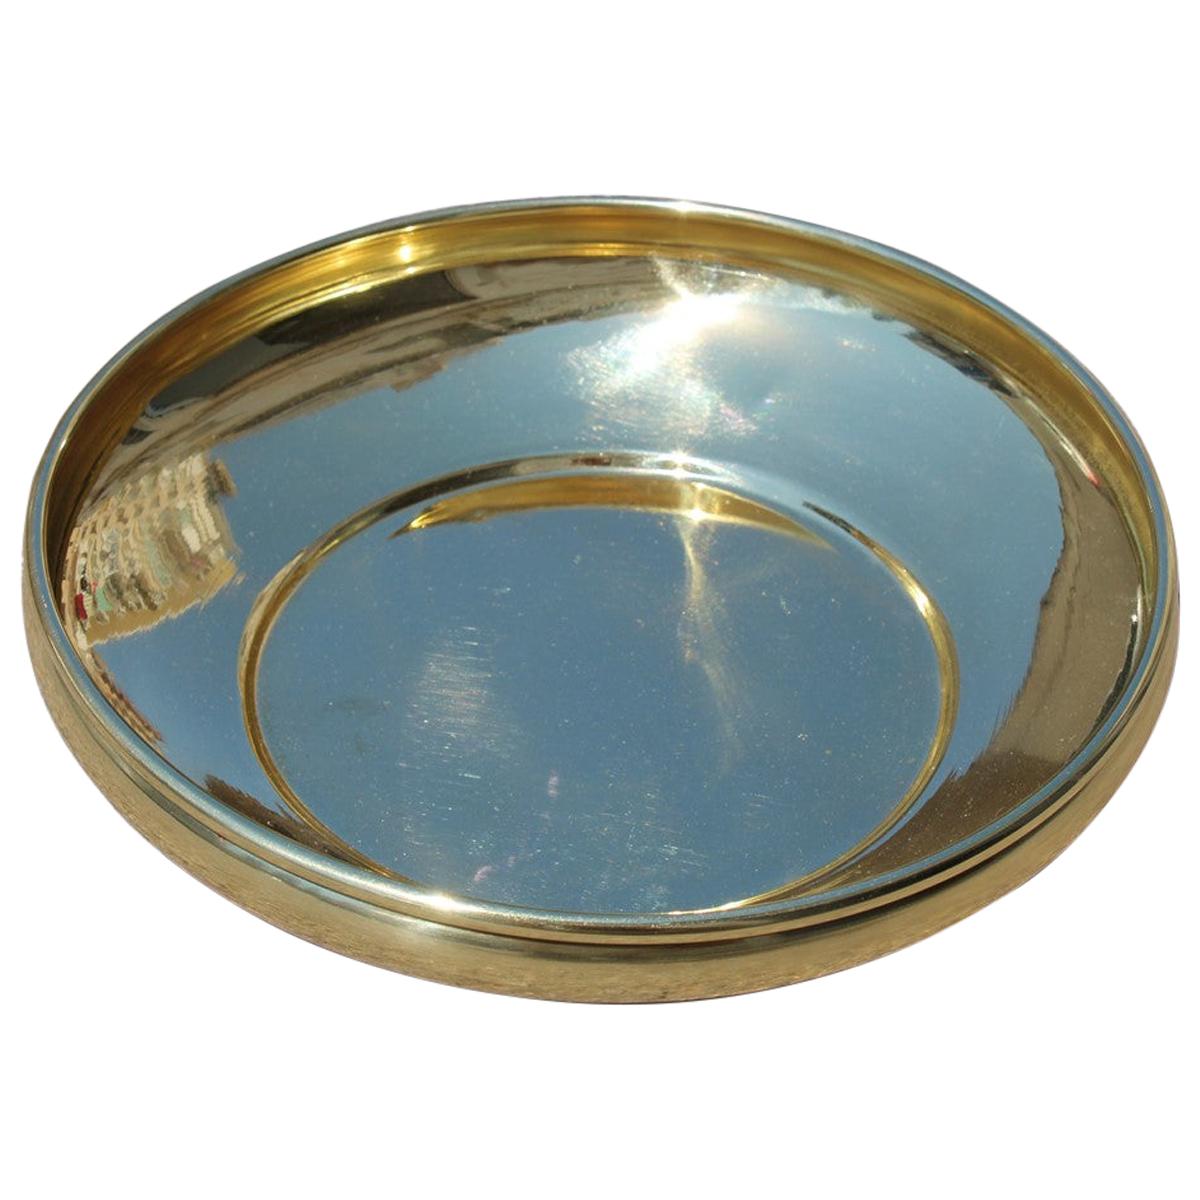 Decorative round brass gold bowl midcentury Italian design.